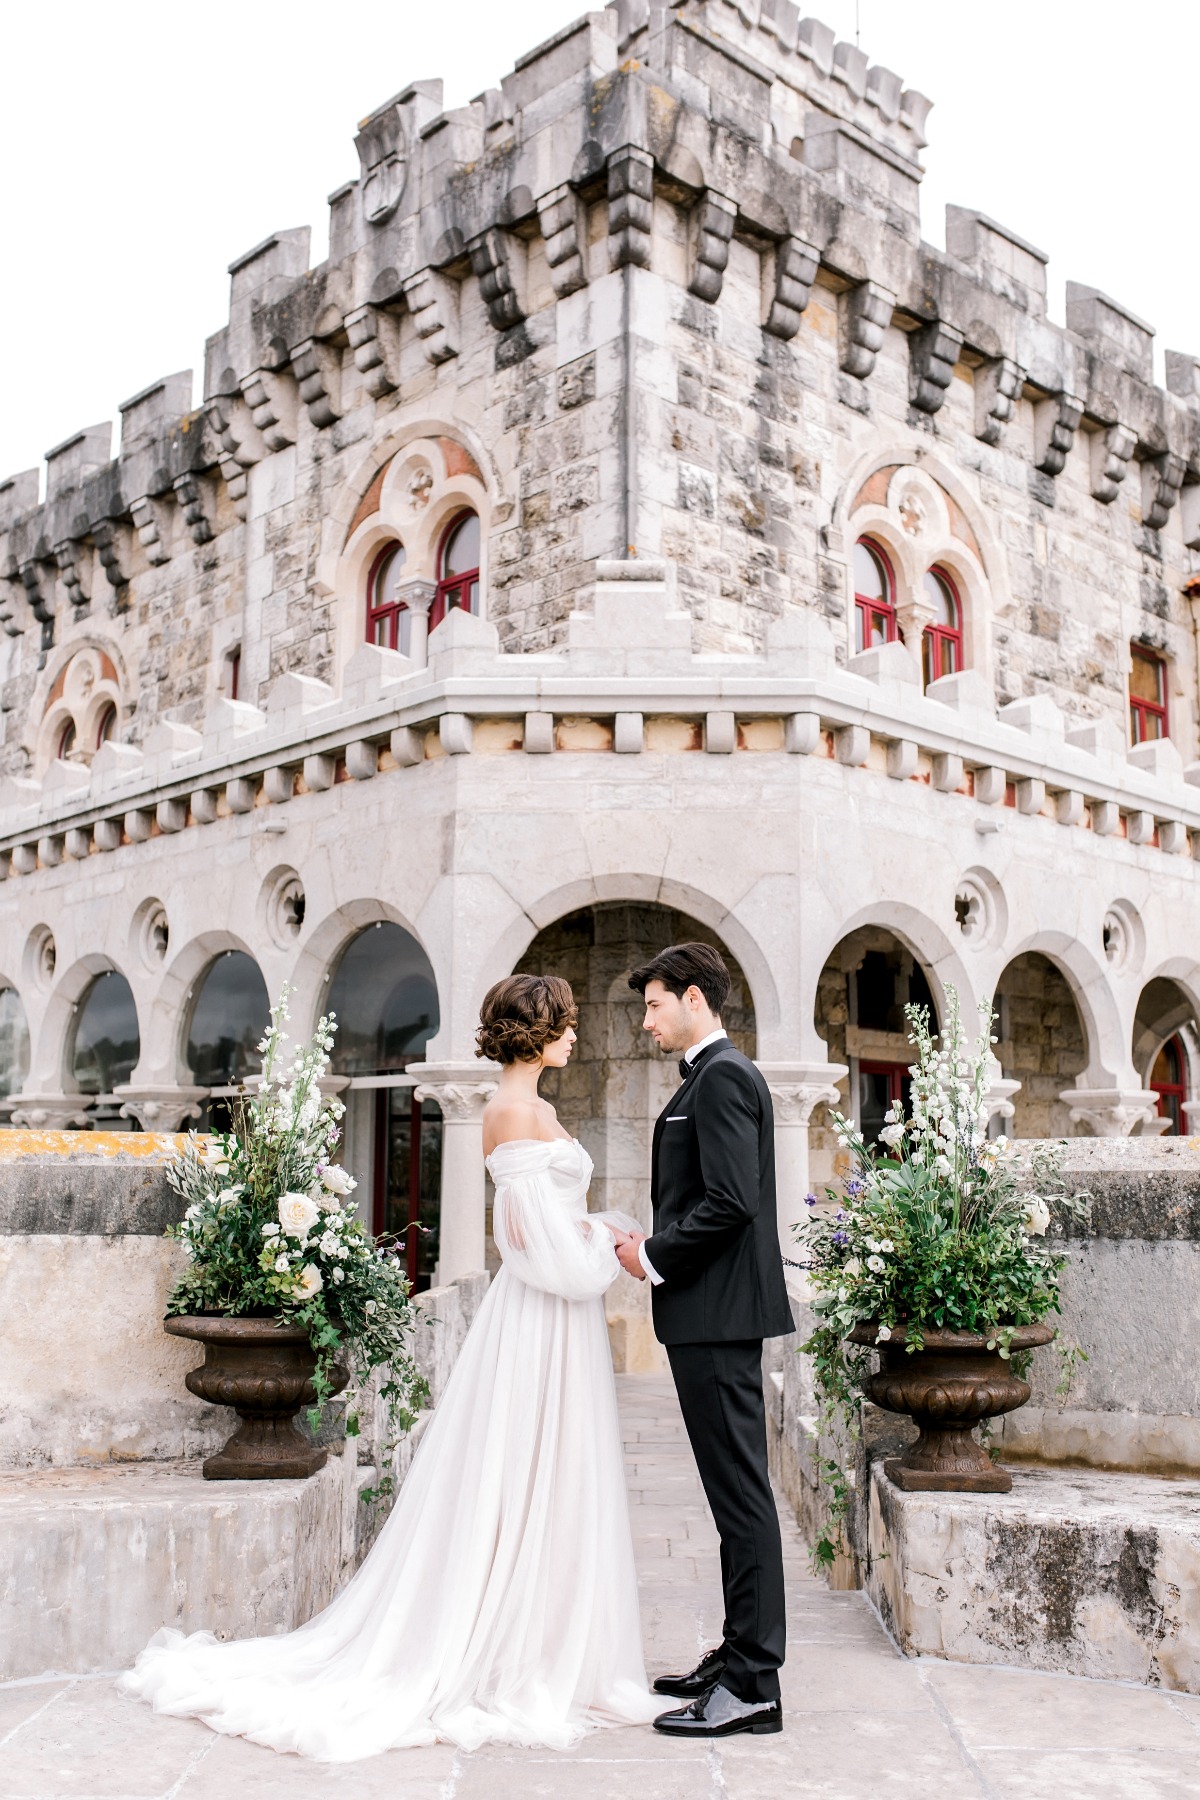 Fairy Tale Castle wedding venue in Portugal on the Ocean